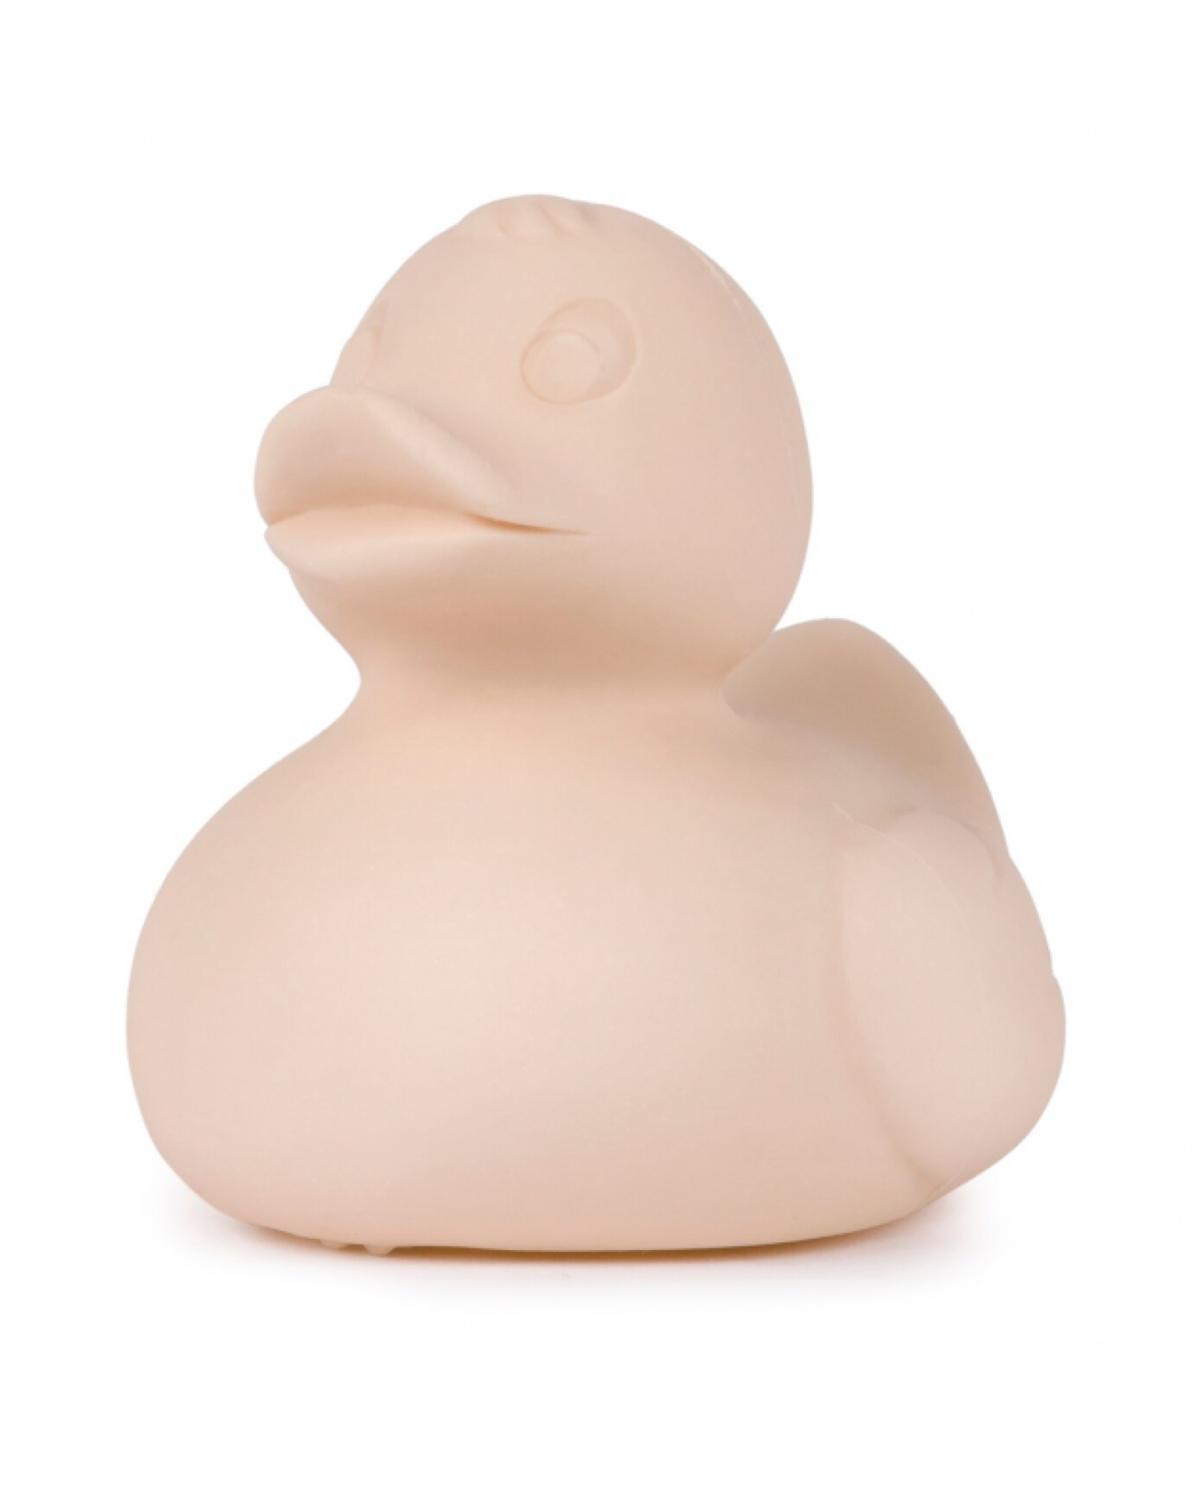 Little oli + carol play elvis the duck in nude